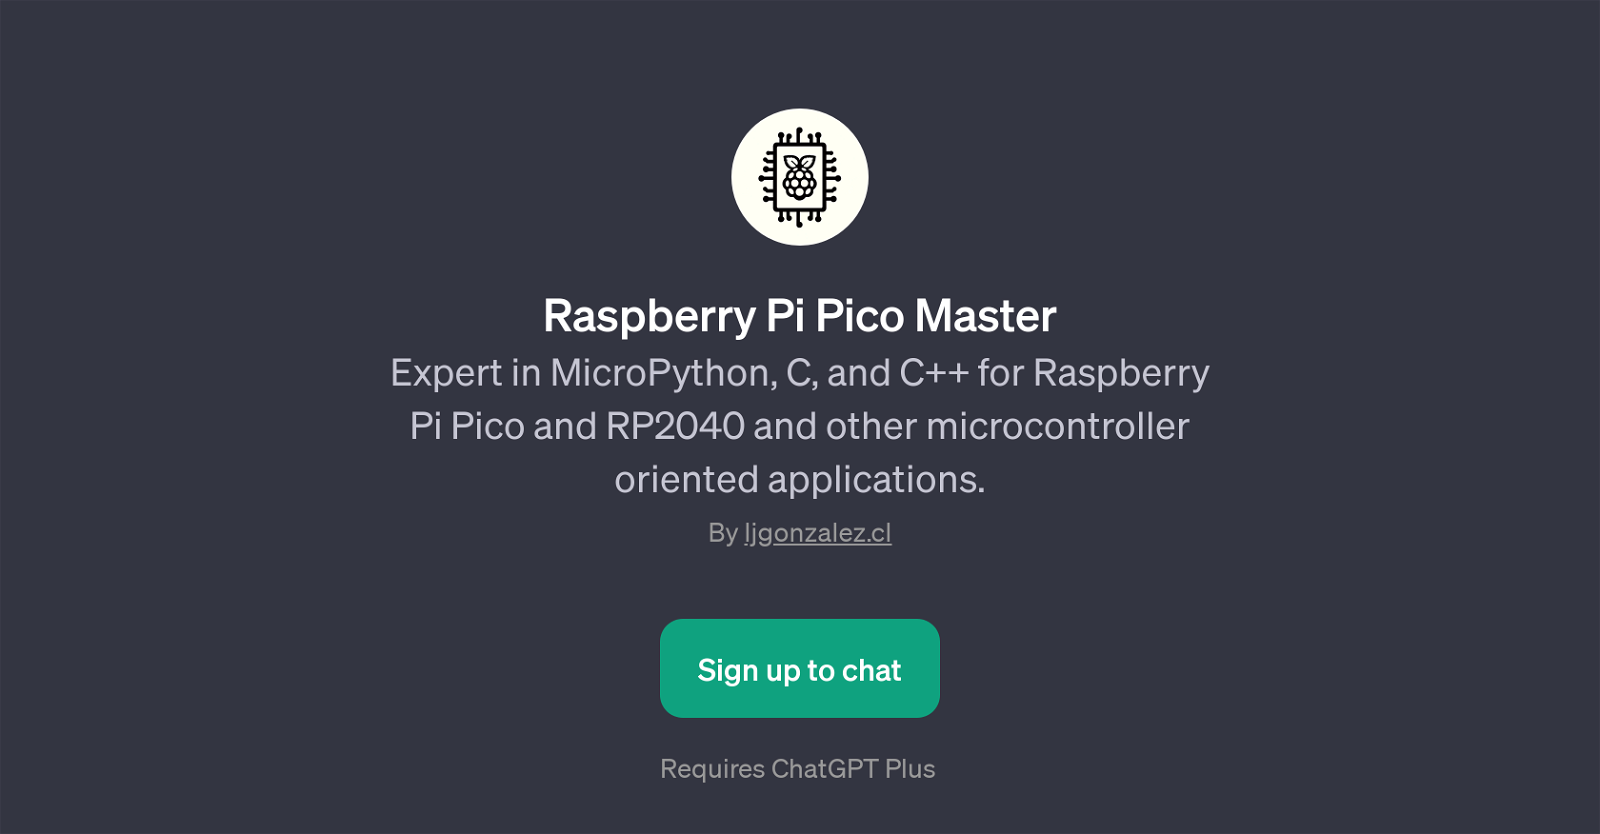 Raspberry Pi Pico Master website